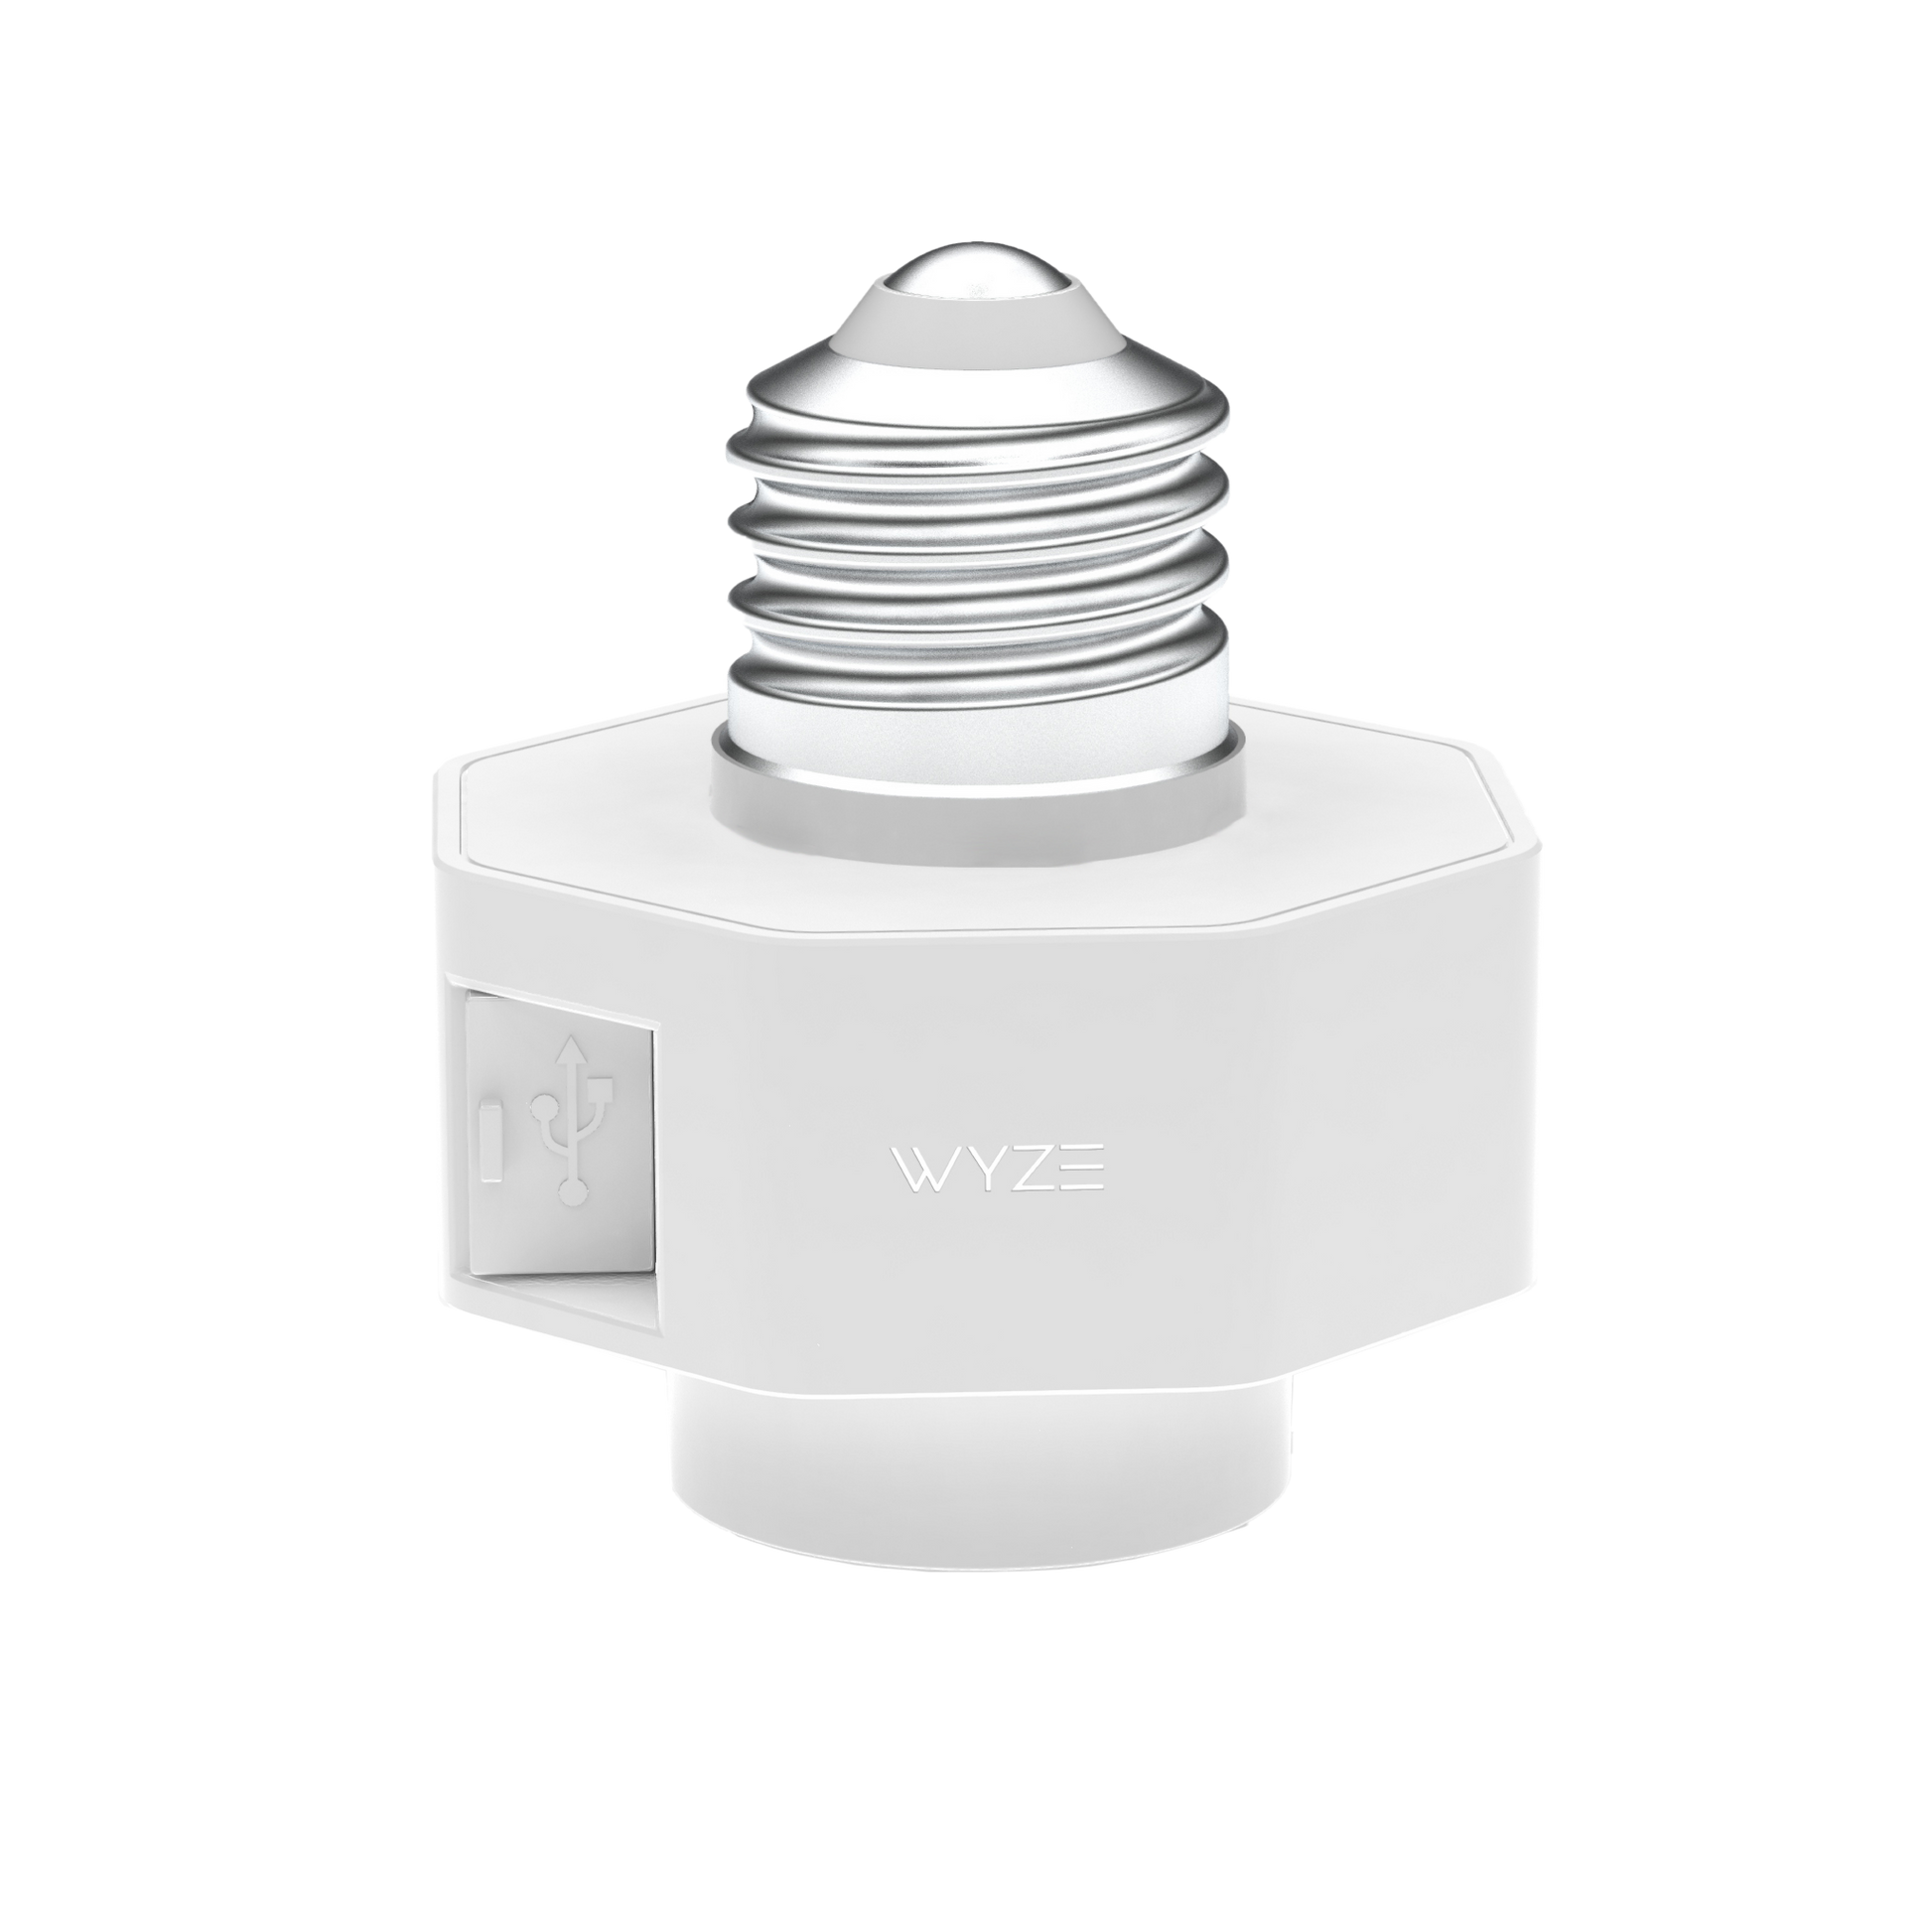 Wyze Plug - Ideas on how to use it 